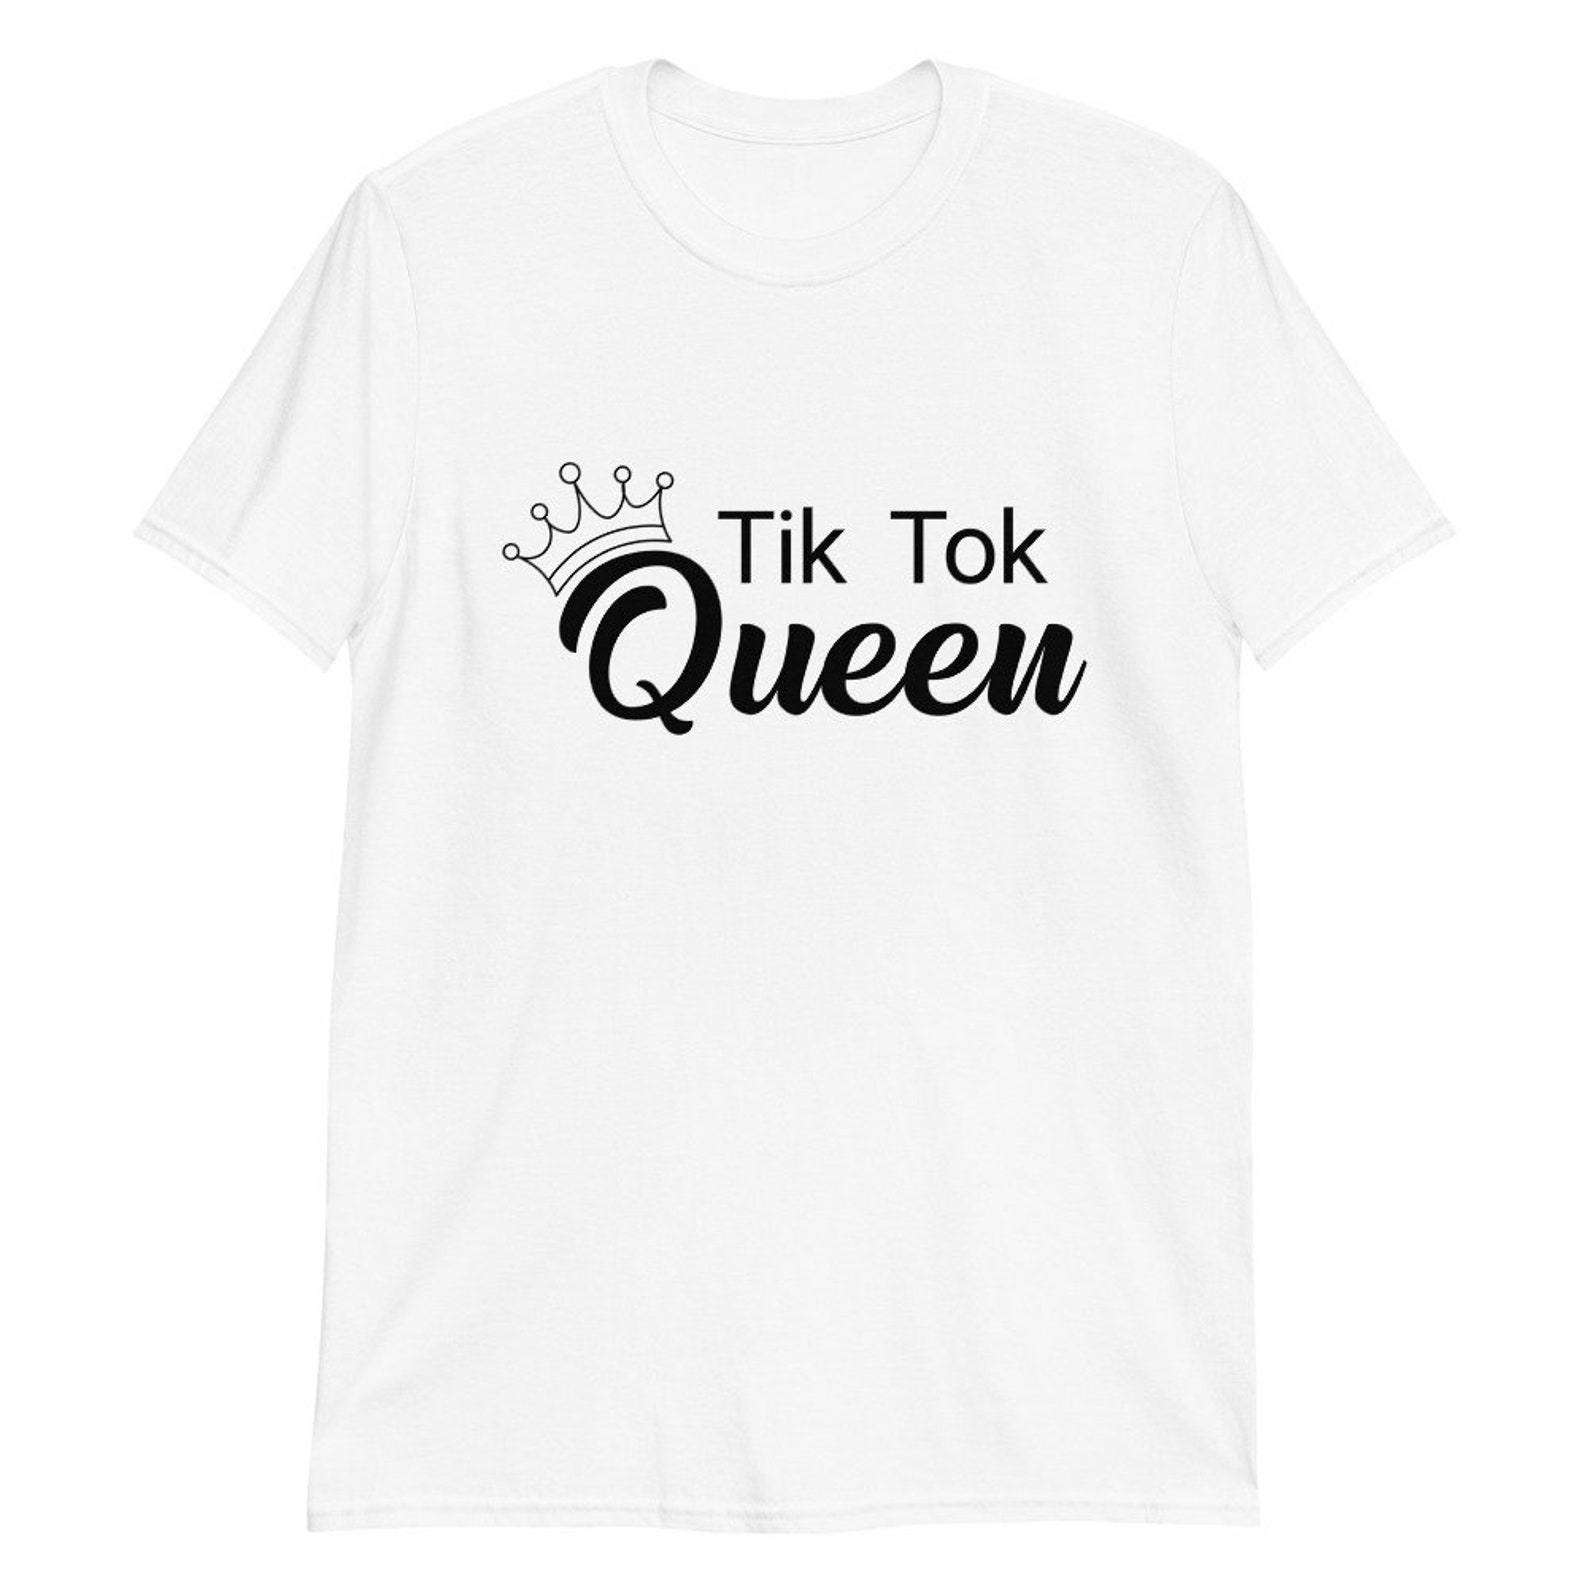 Tik Tok Queen Shirt Quarantine and Tik Tok Queen Shirt Tik | Etsy